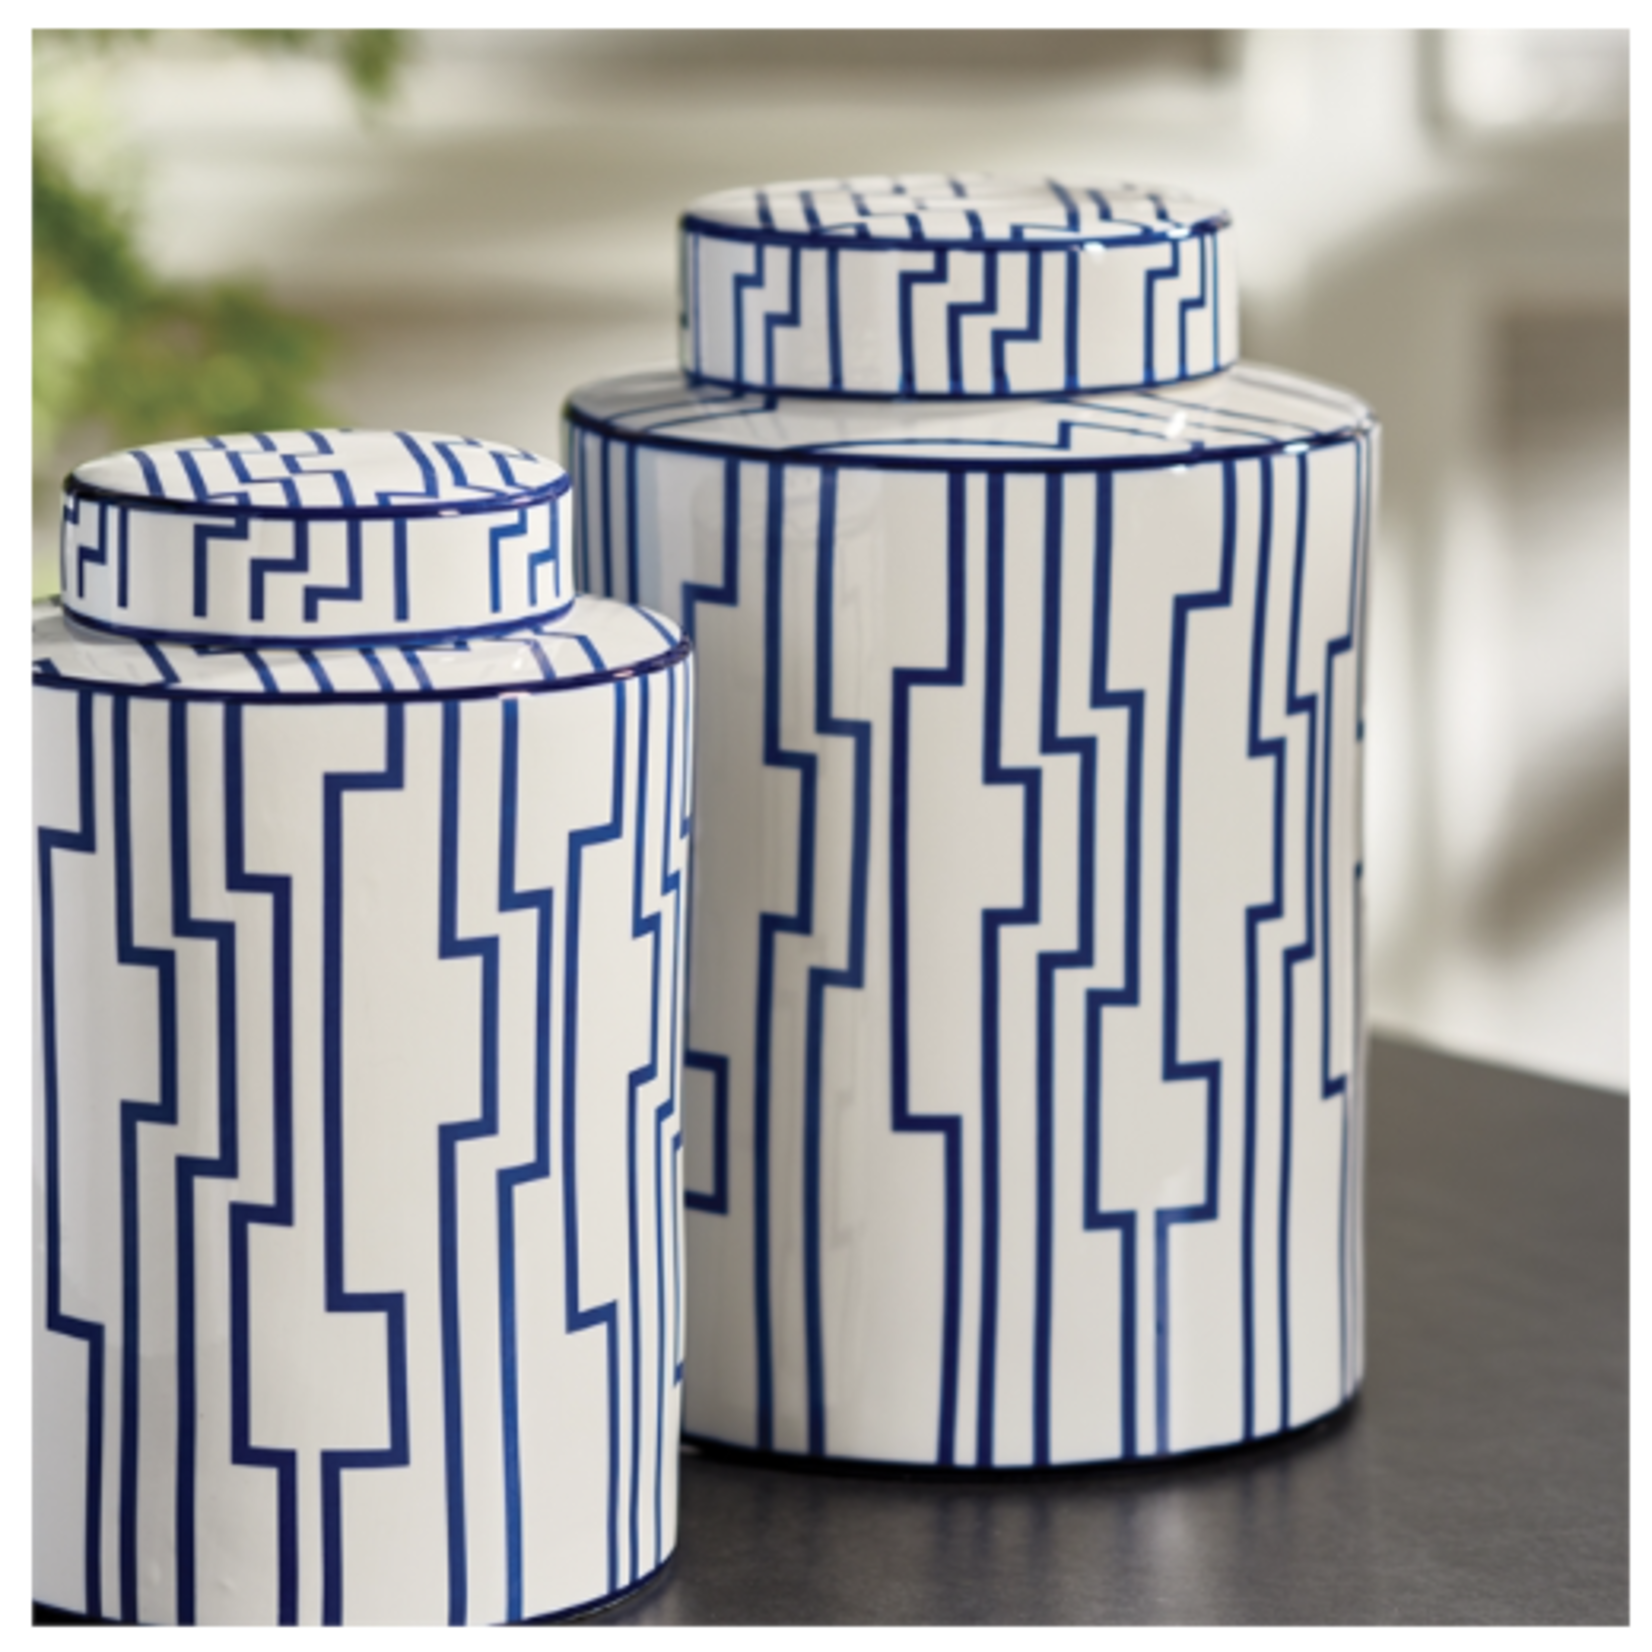 Outside The Box 12" Barclay Butera White & Blue Labyrinth Ceramic Lidded Jar